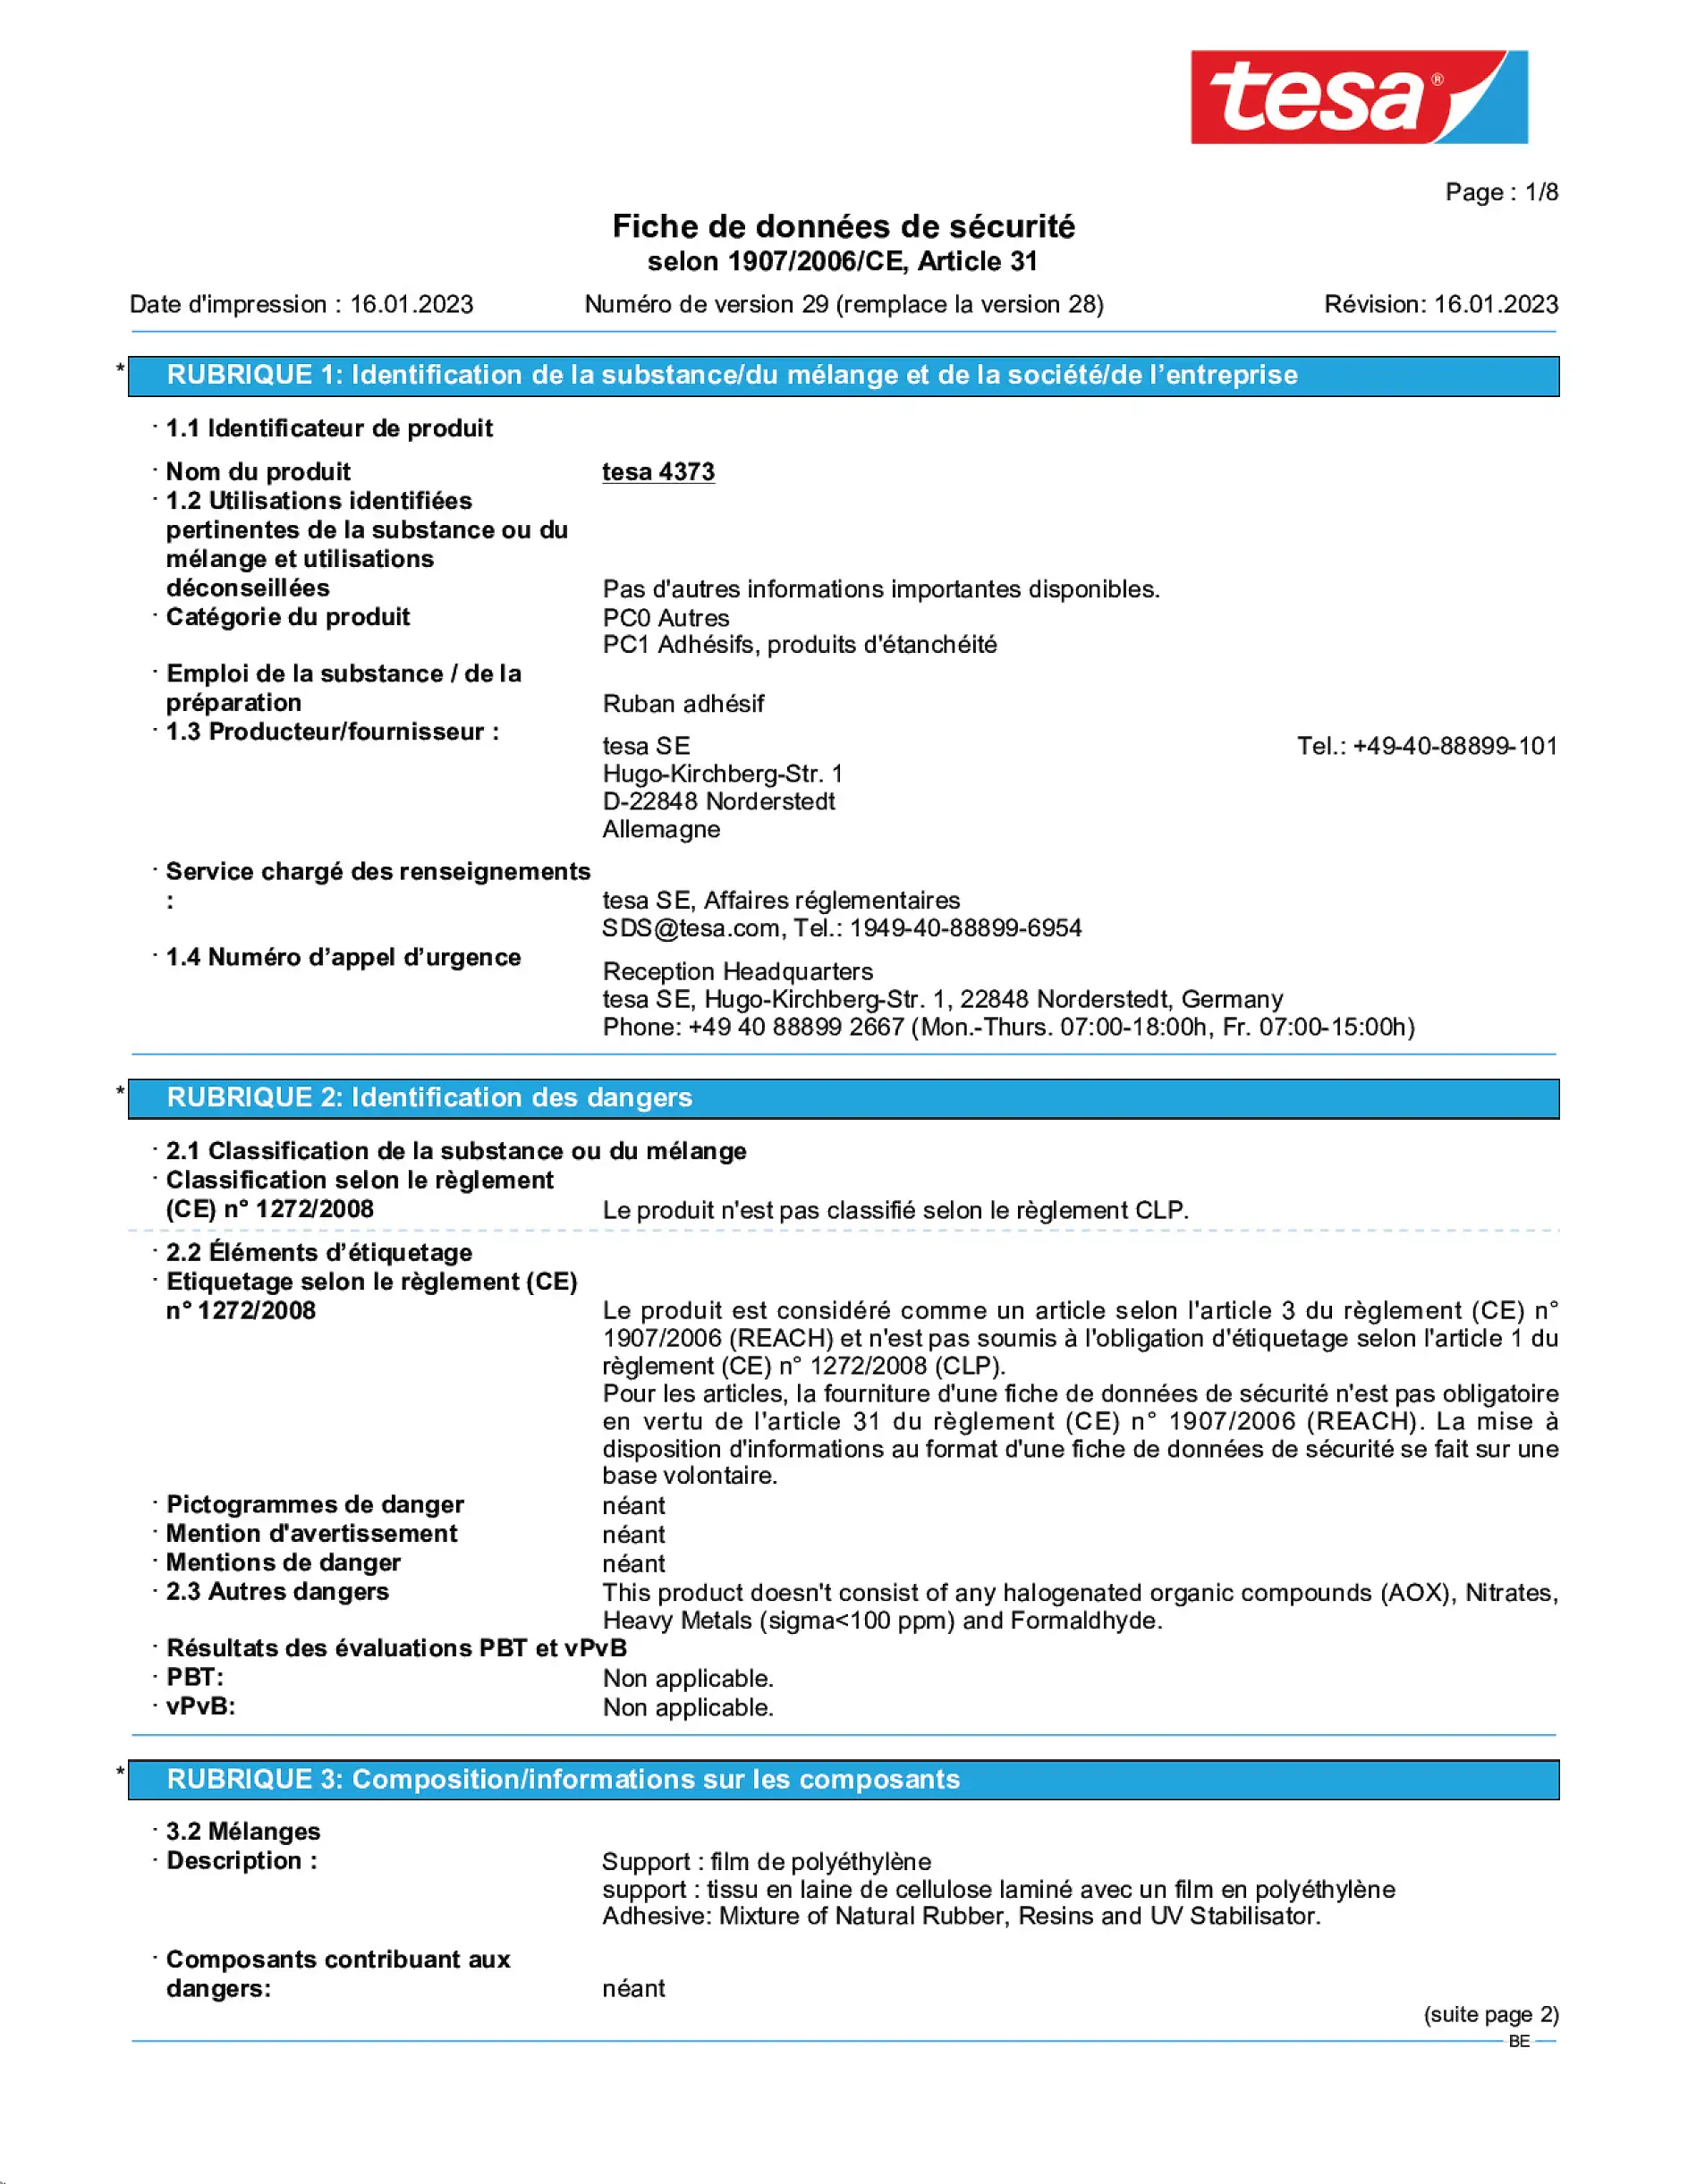 Safety data sheet_tesa® Professional 04373_nl-BE_v29